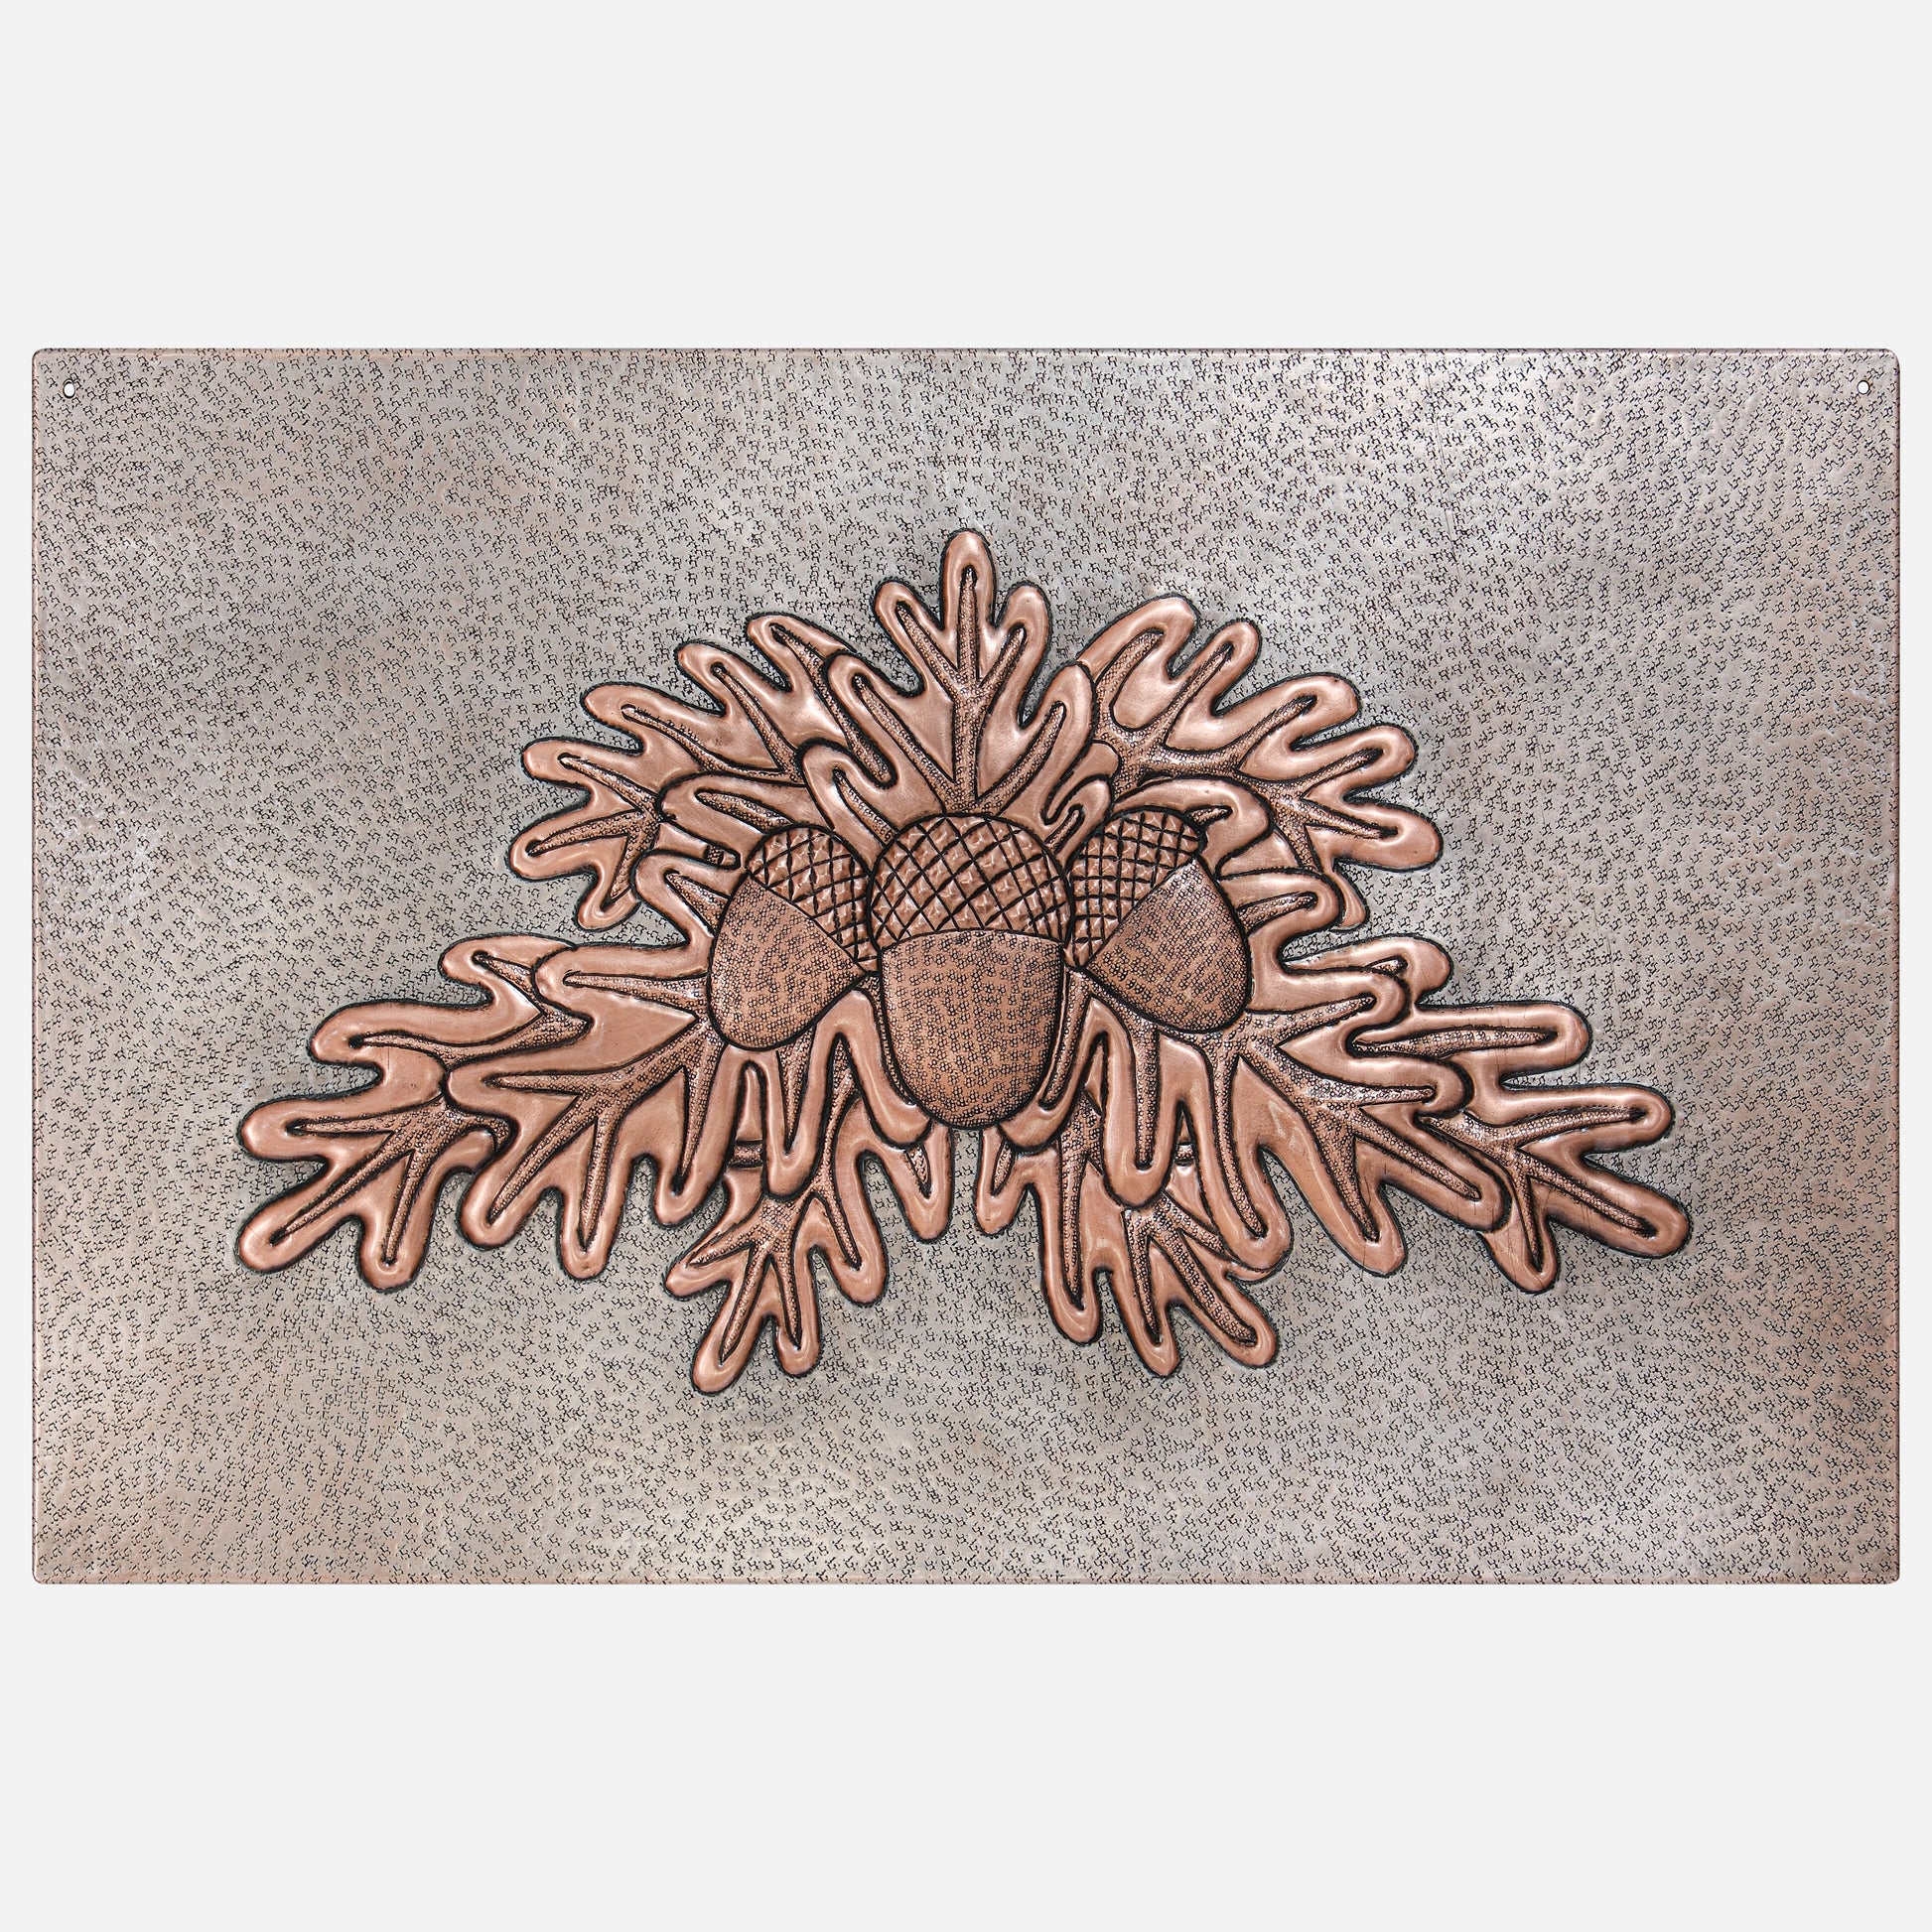 Copper Backsplash Panel (Oak Tree Leaves with Acorns, Silver&Copper Color)